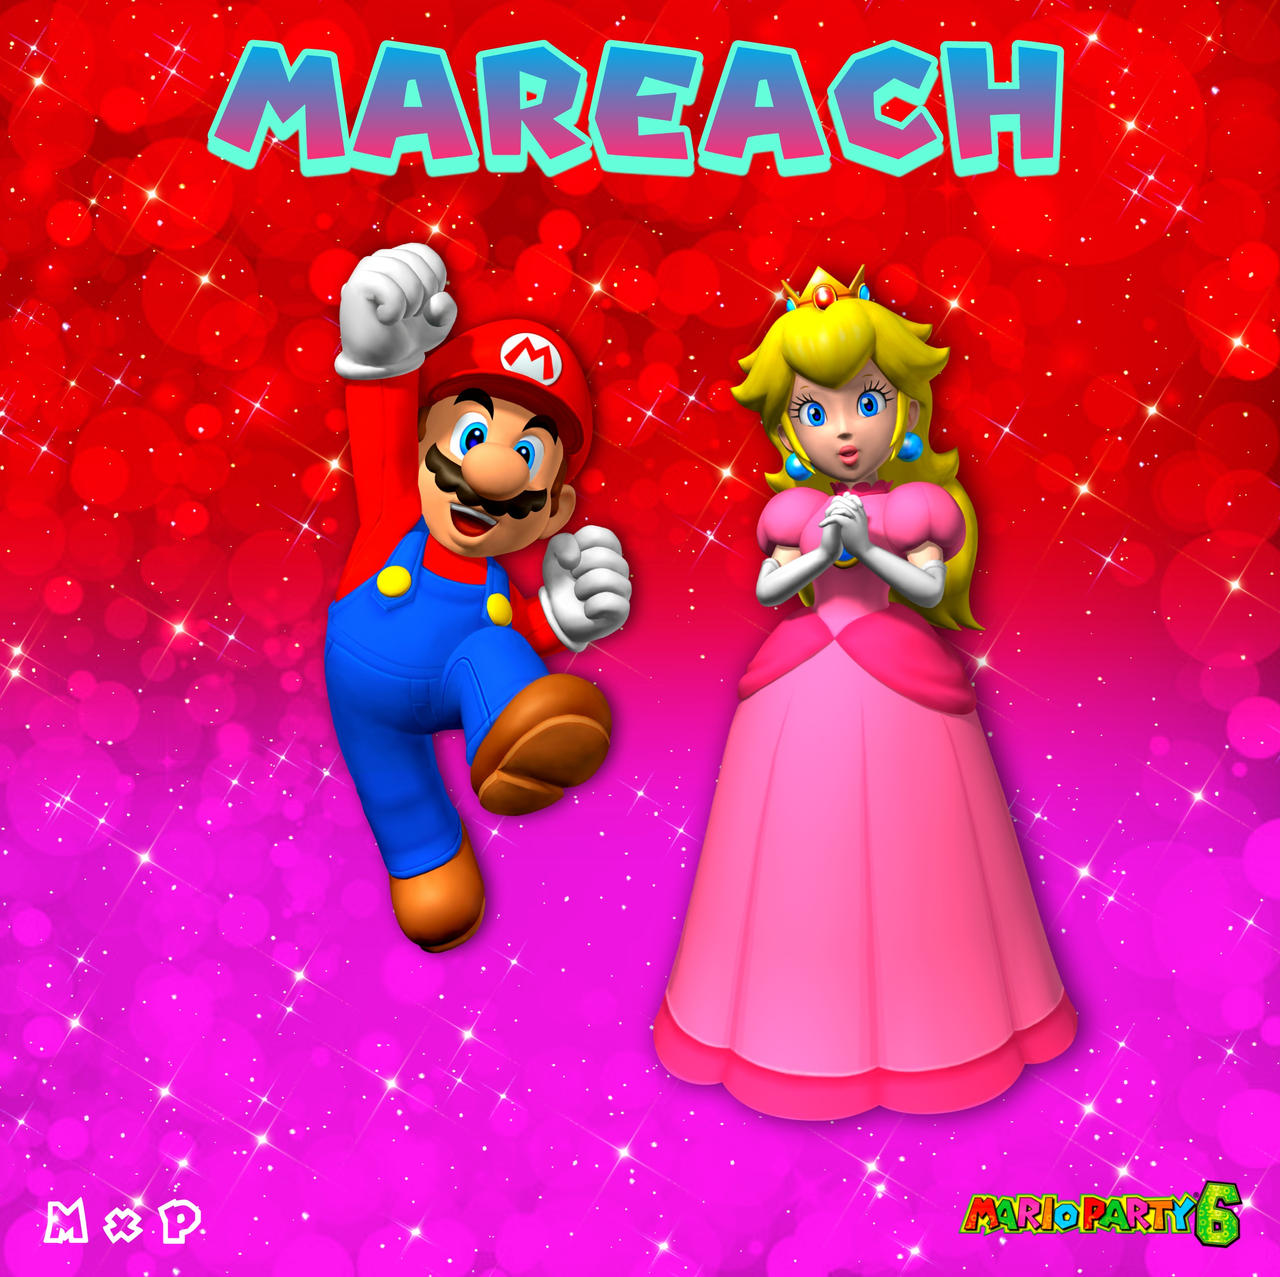 Mario and Peach Crossover by cristalaguamarina on DeviantArt